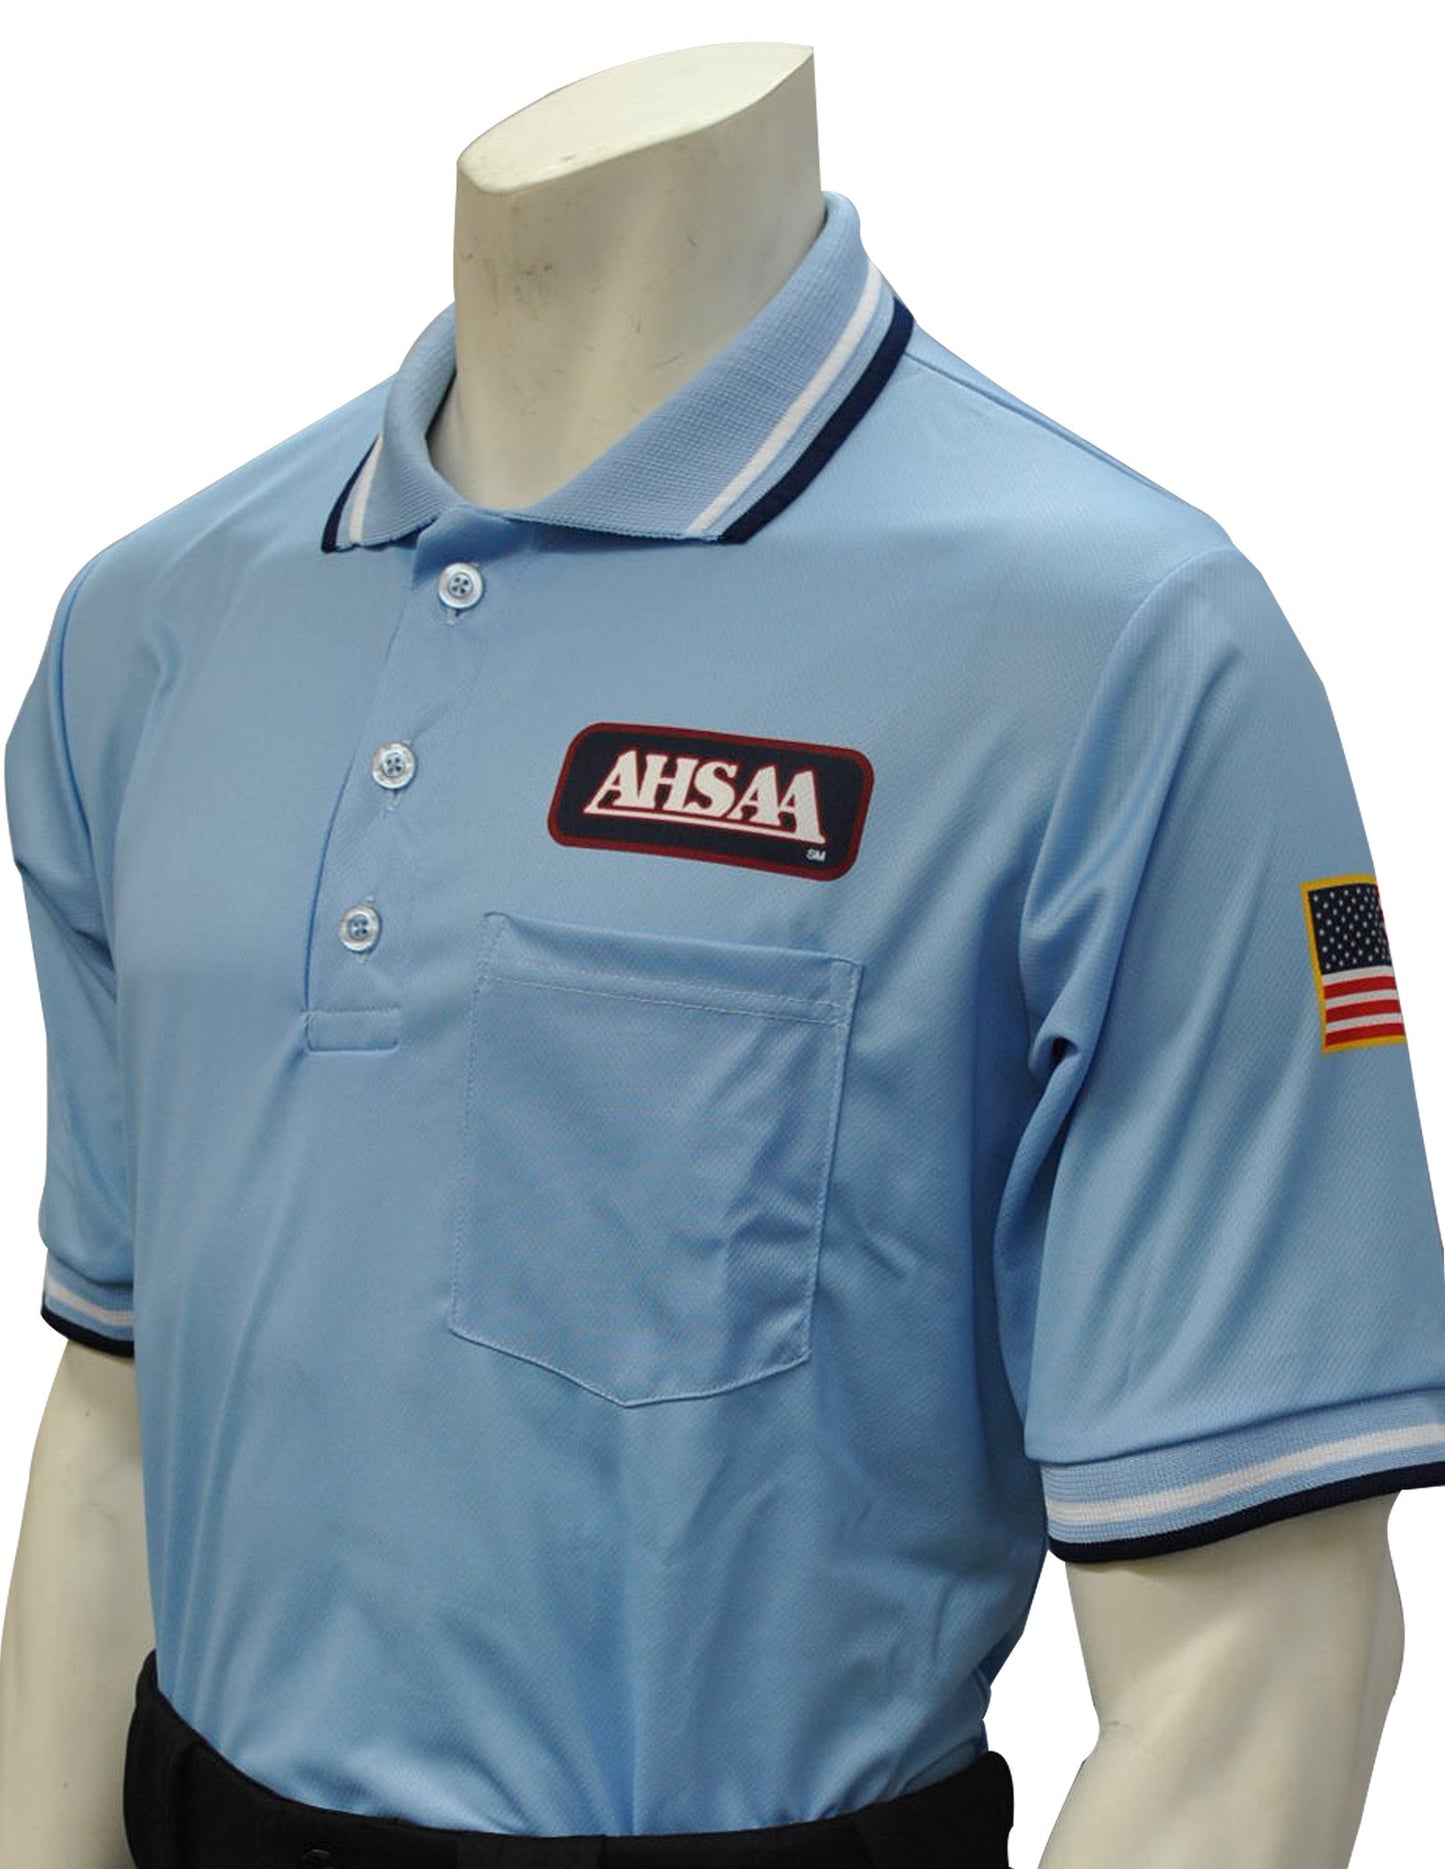 USA300AL-Dye Sub Alabama Baseball Short Sleeve Shirt - Available in Navy, Powder Blue and Cream